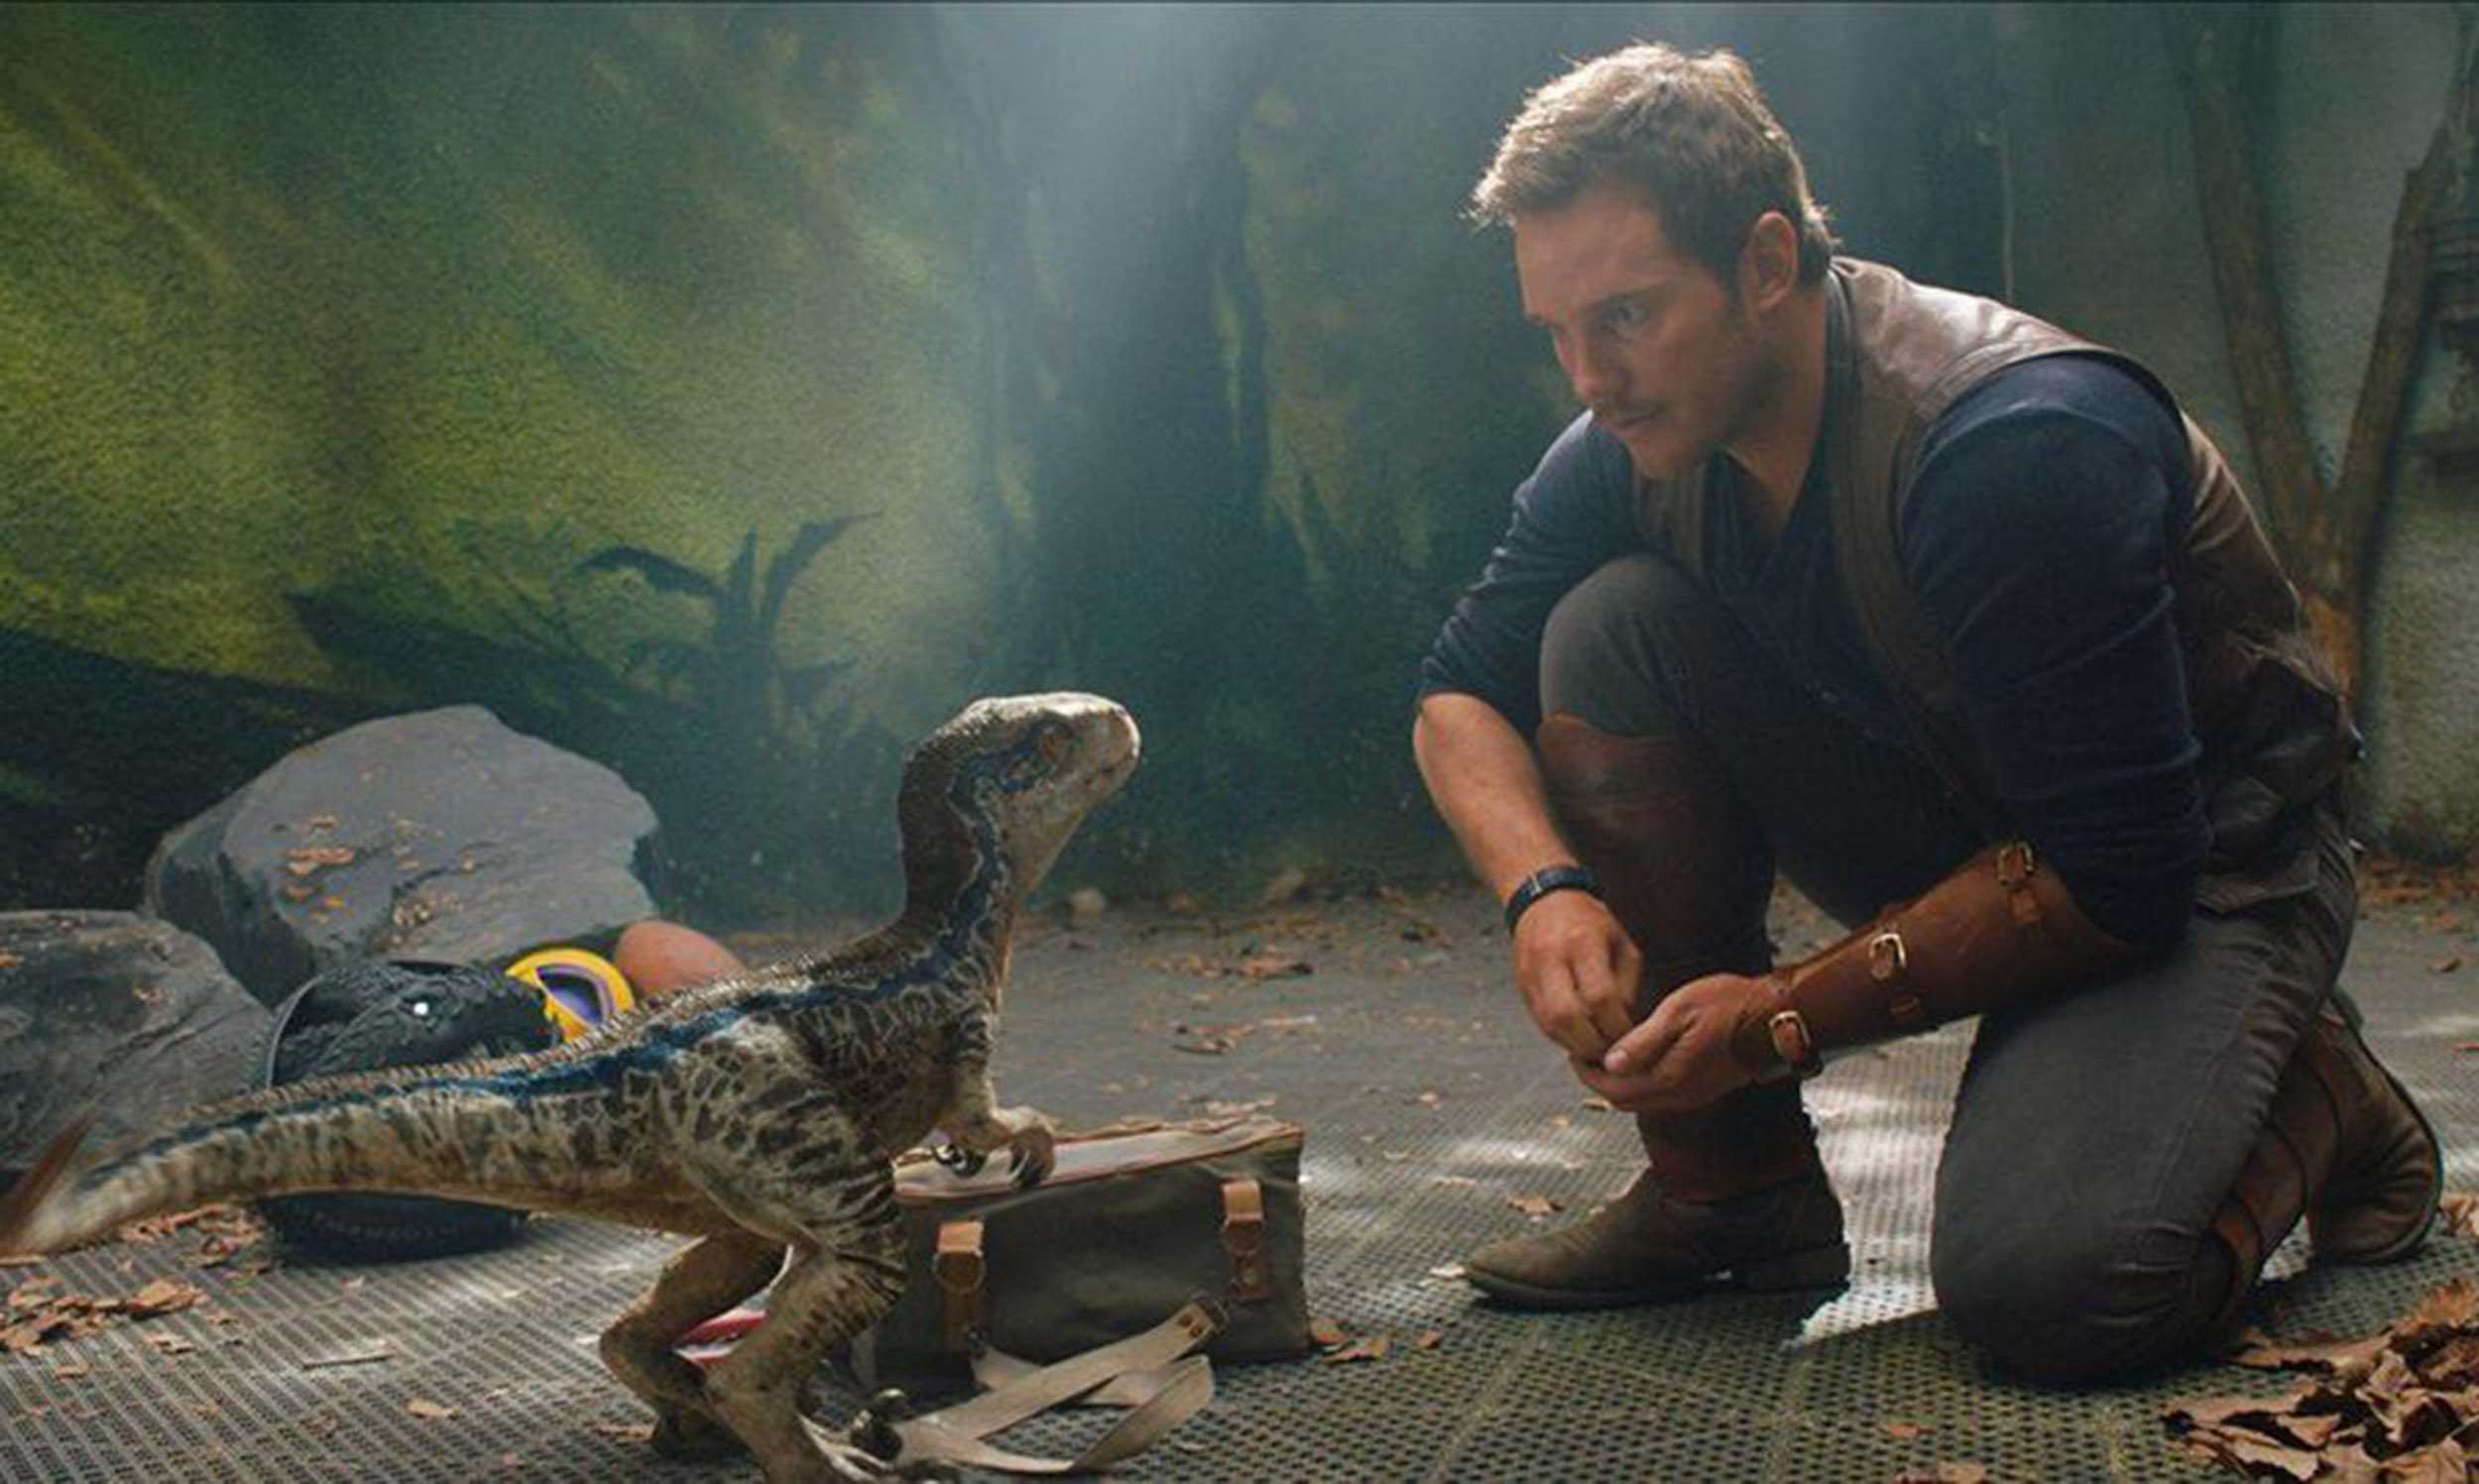 Jurassic World: Dominion director Colin Trevorrow teases an emotional scene between Chris Pratt and his dinosaur